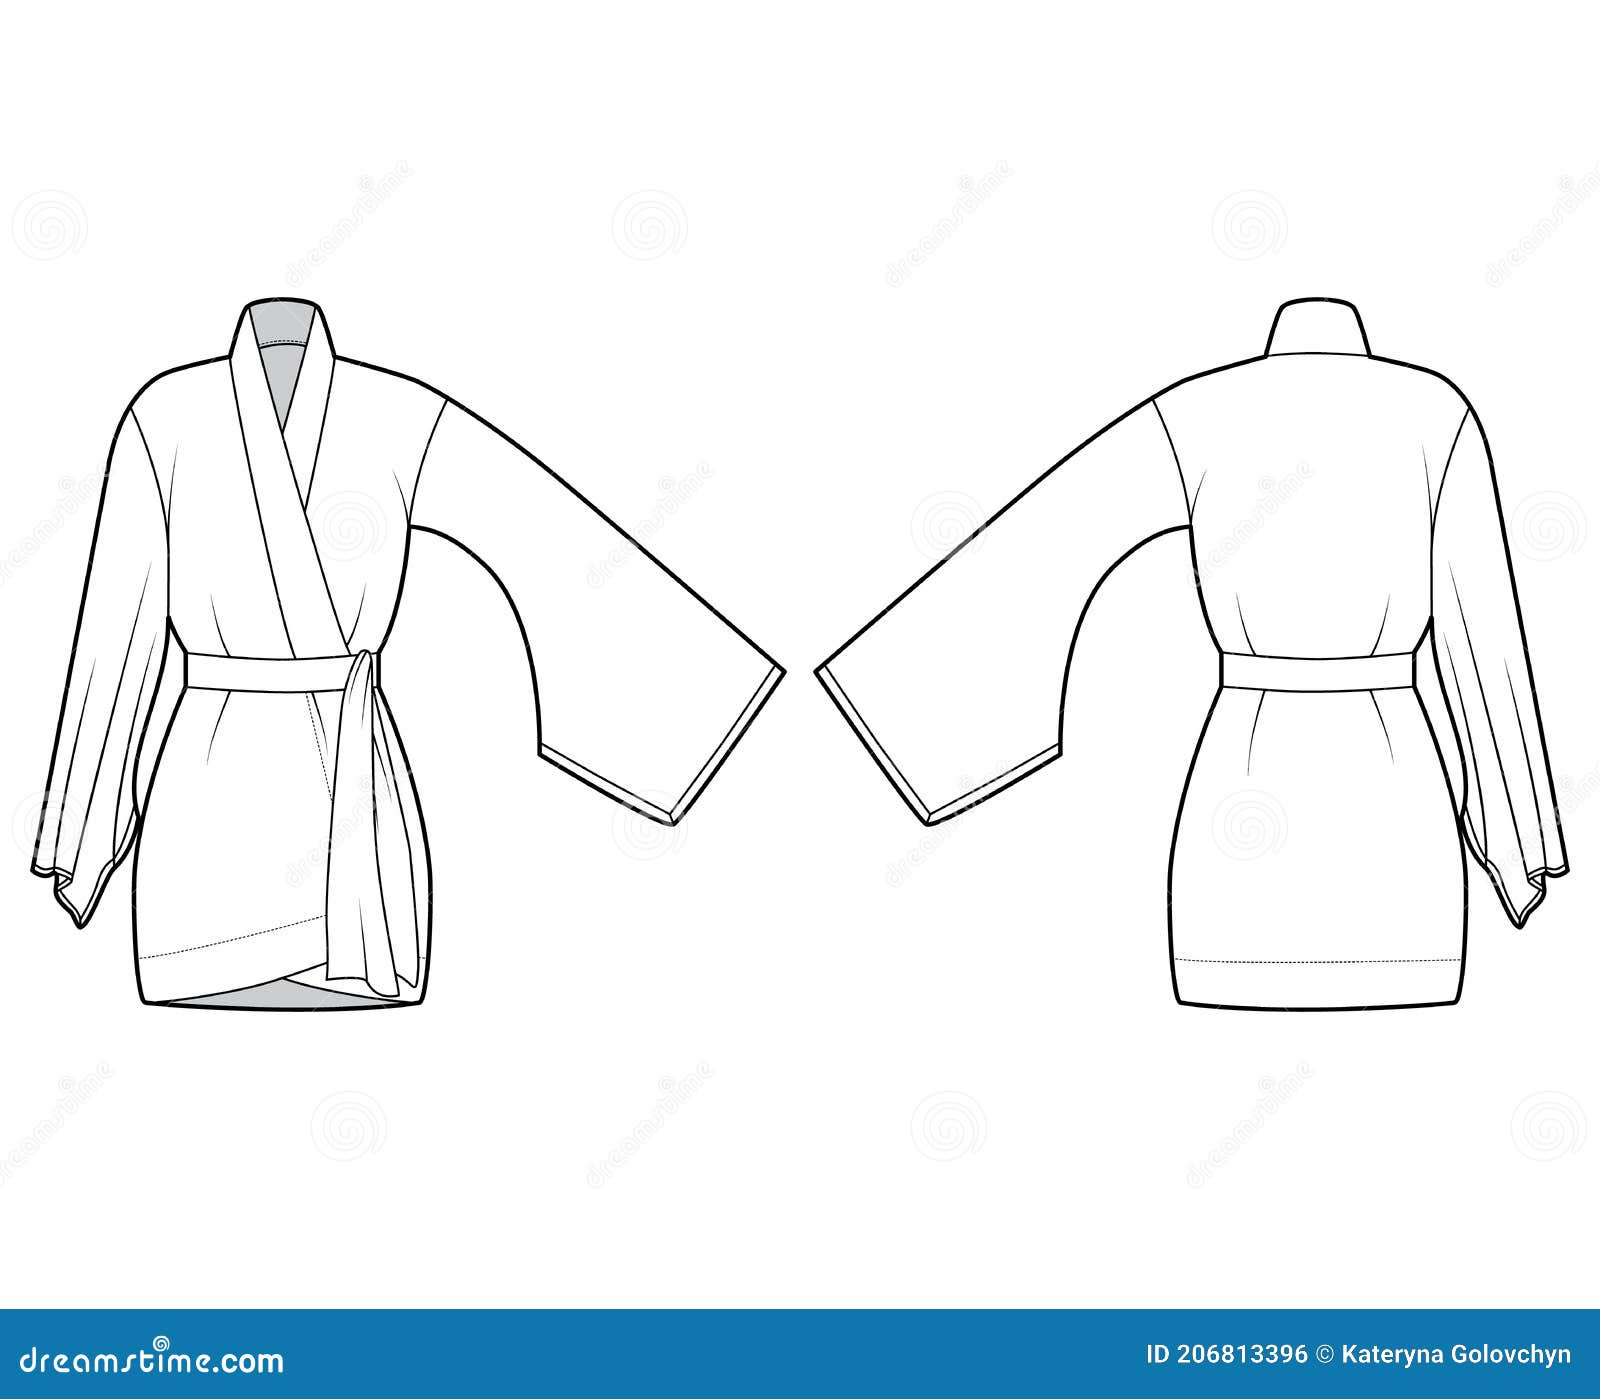 kimono robe technical fashion illustration long wide sleeves belt to cinch waist above knee length kimono robe 206813396